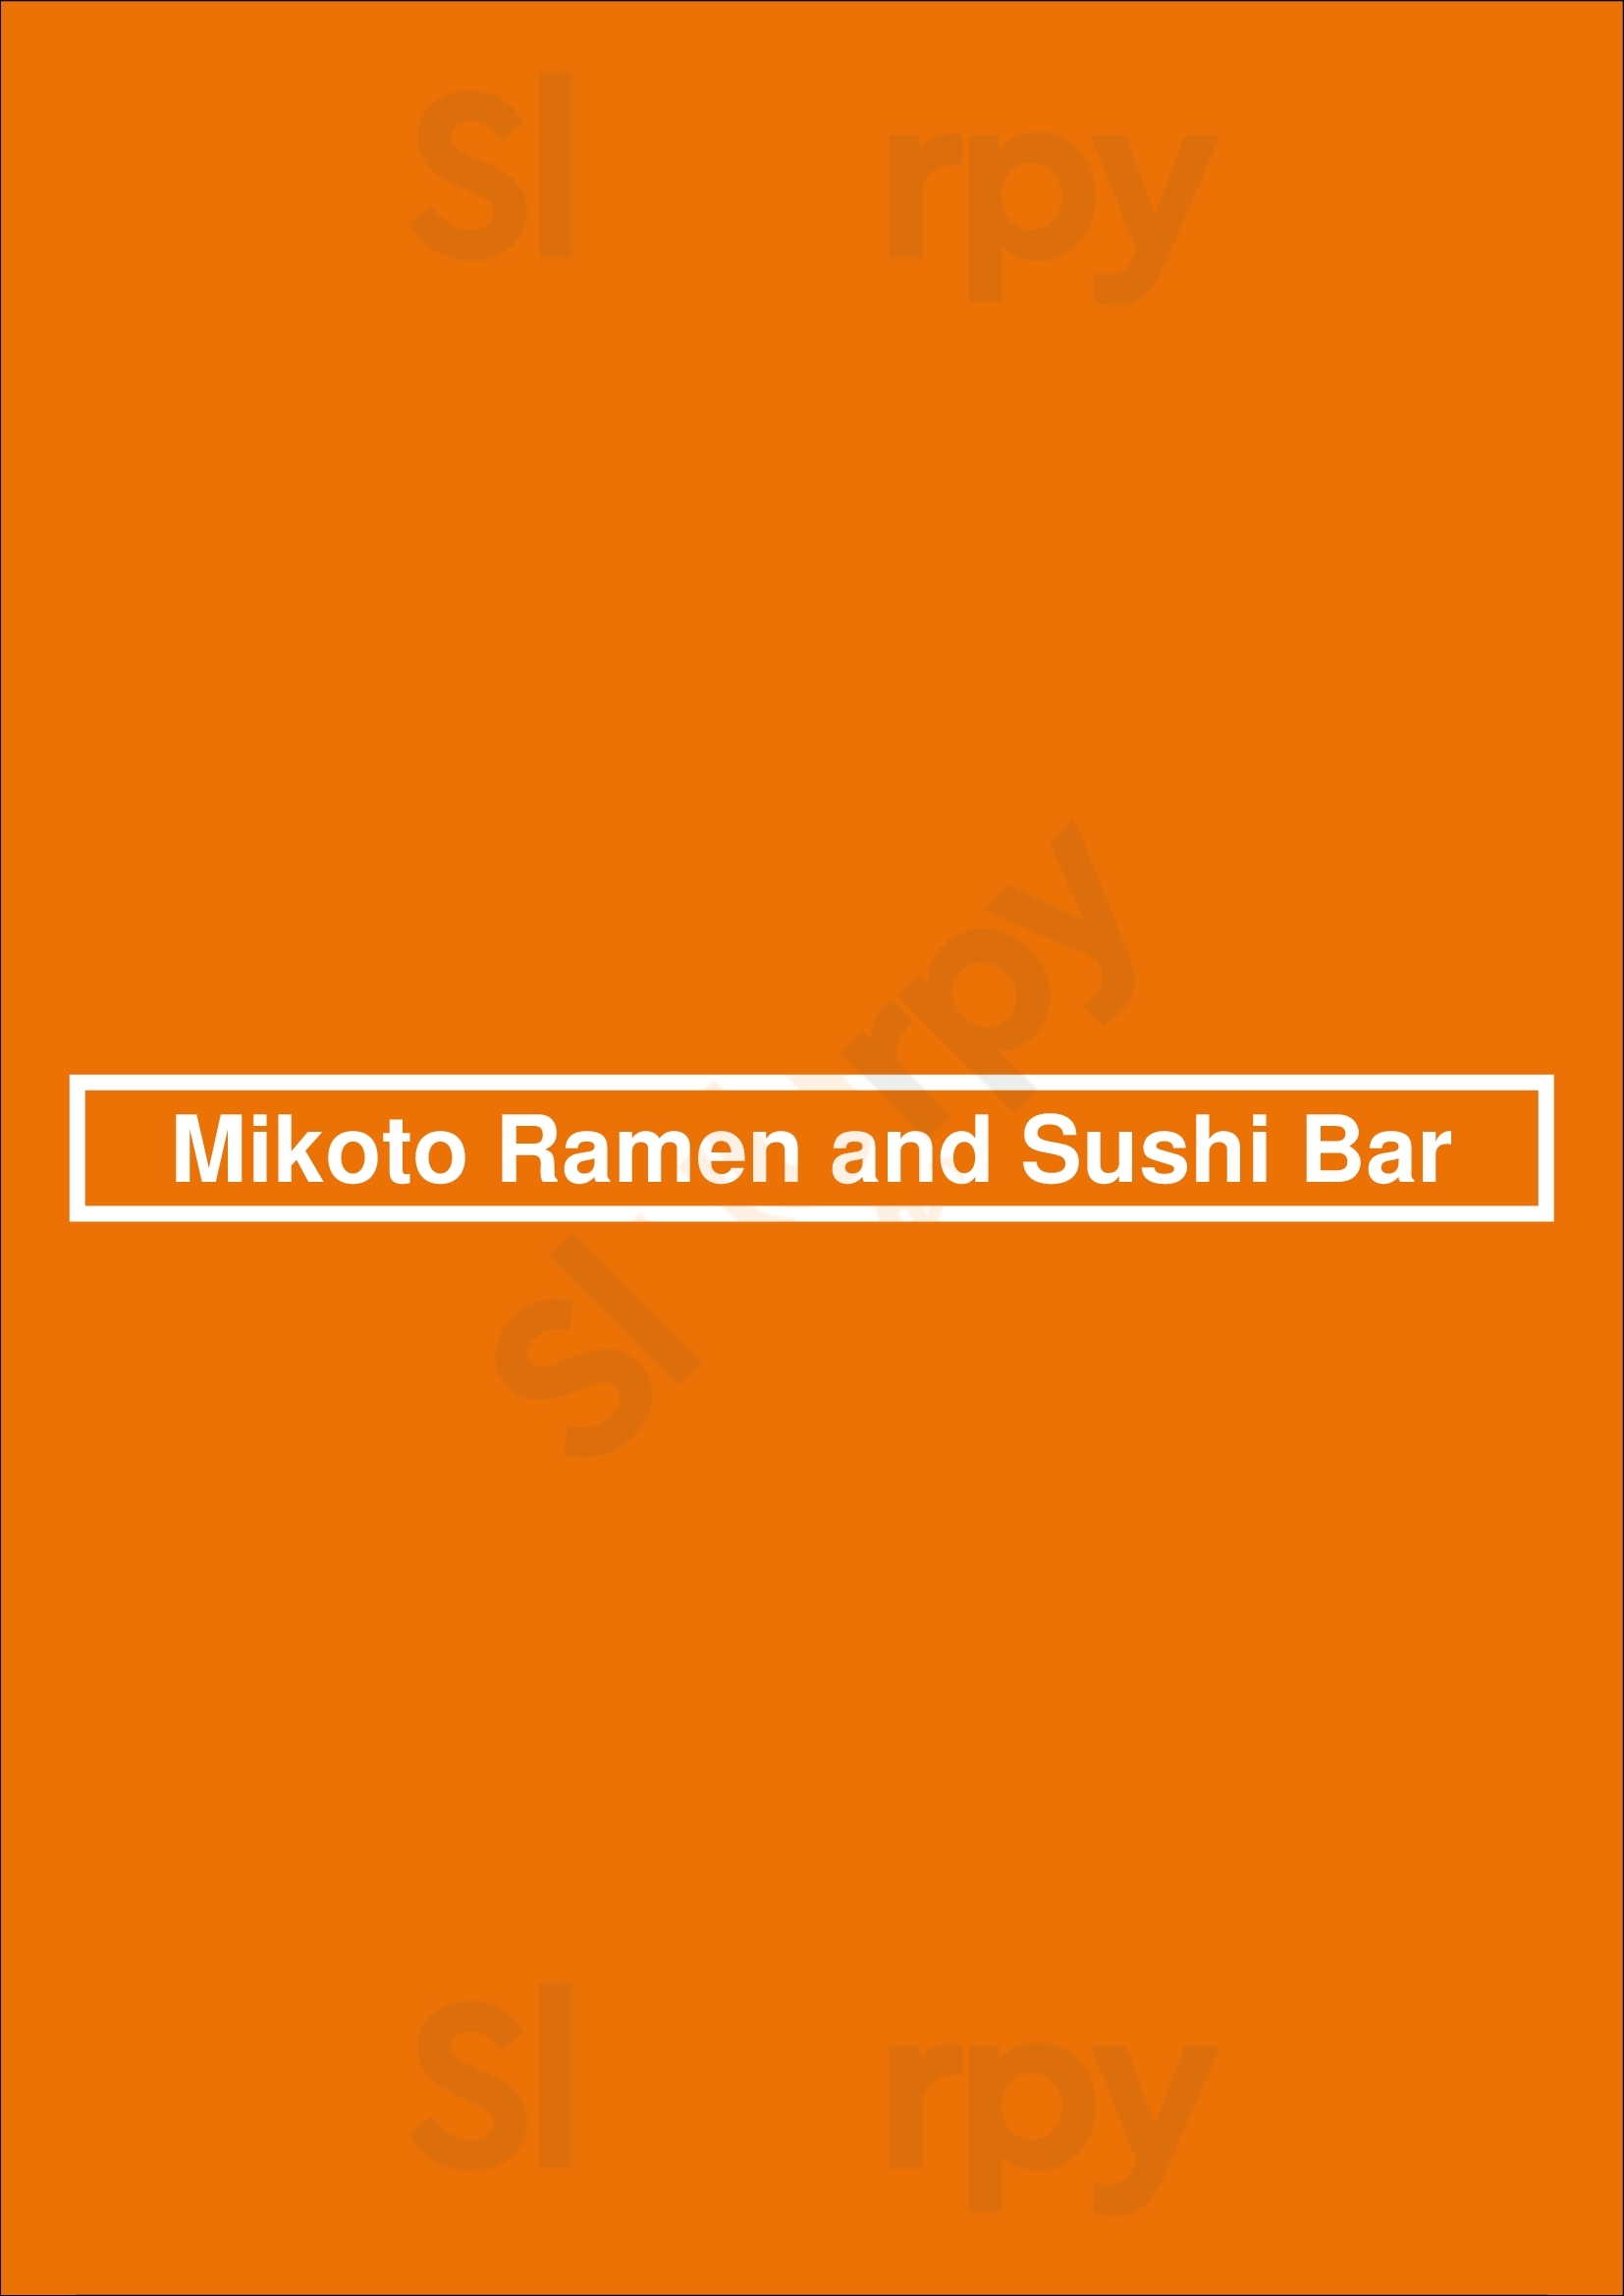 Mikoto Ramen And Sushi Bar Houston Menu - 1